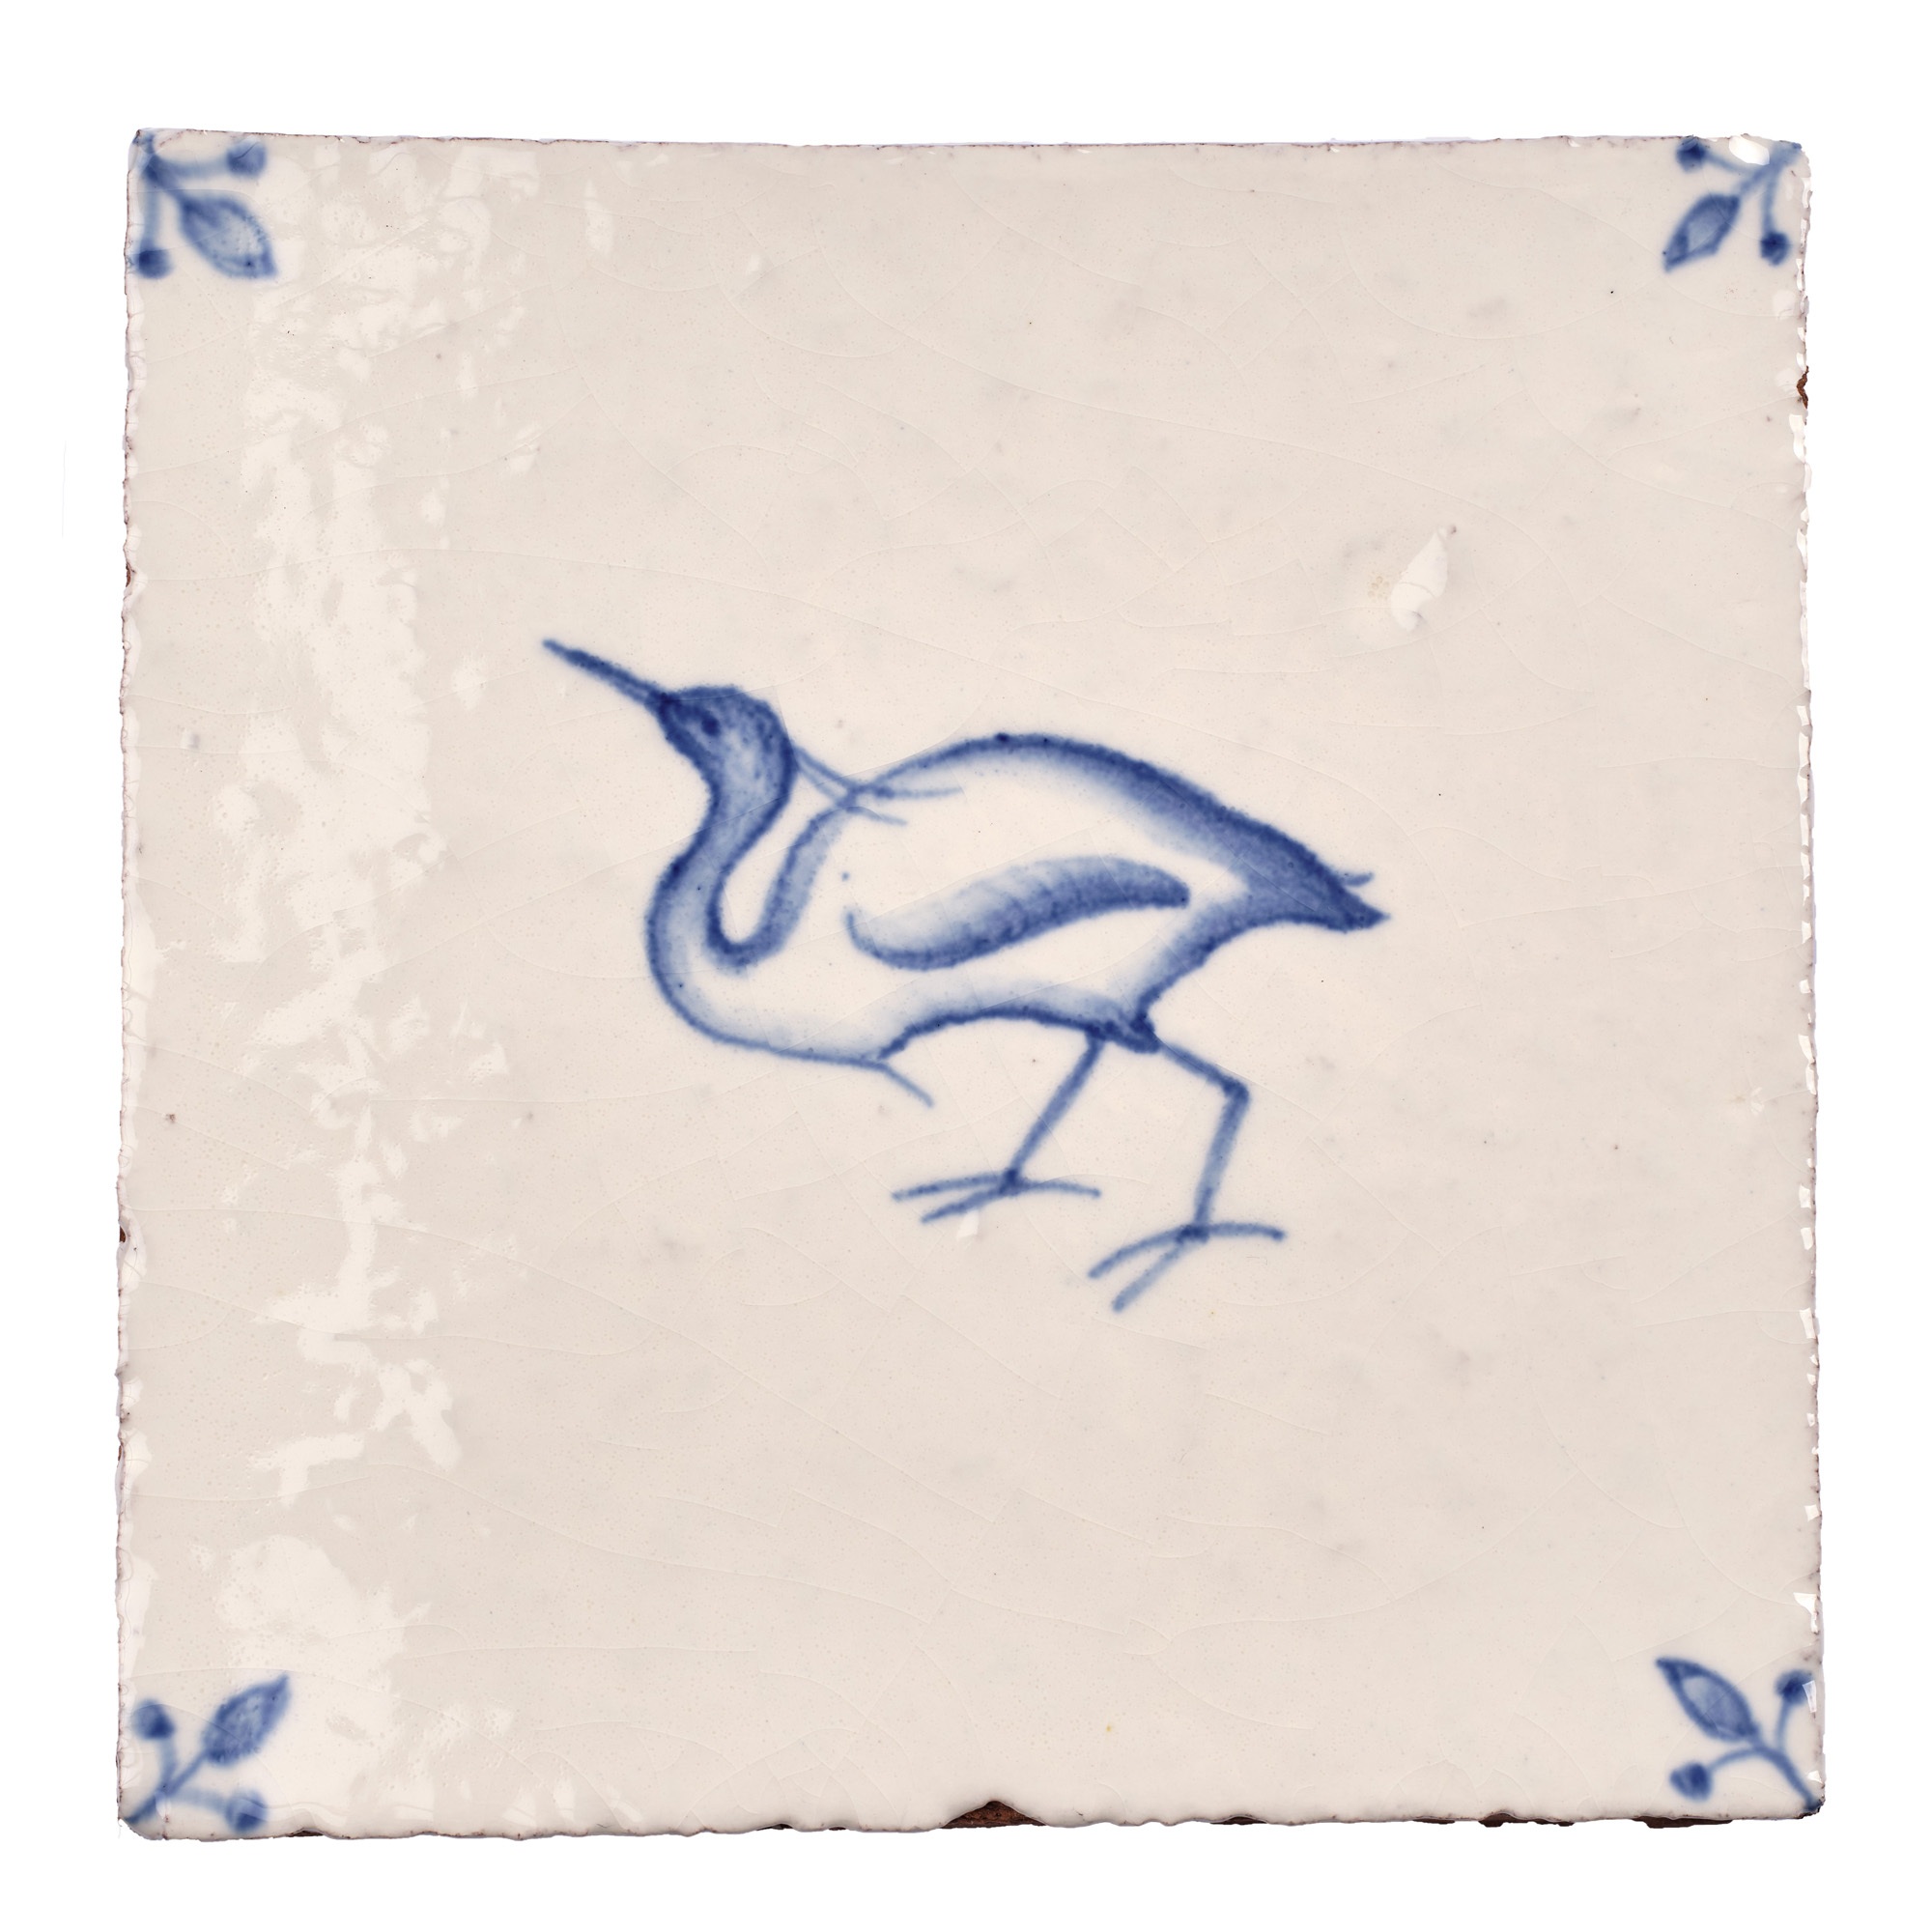 Wilding Egret with Corner Motif Square, product variant image